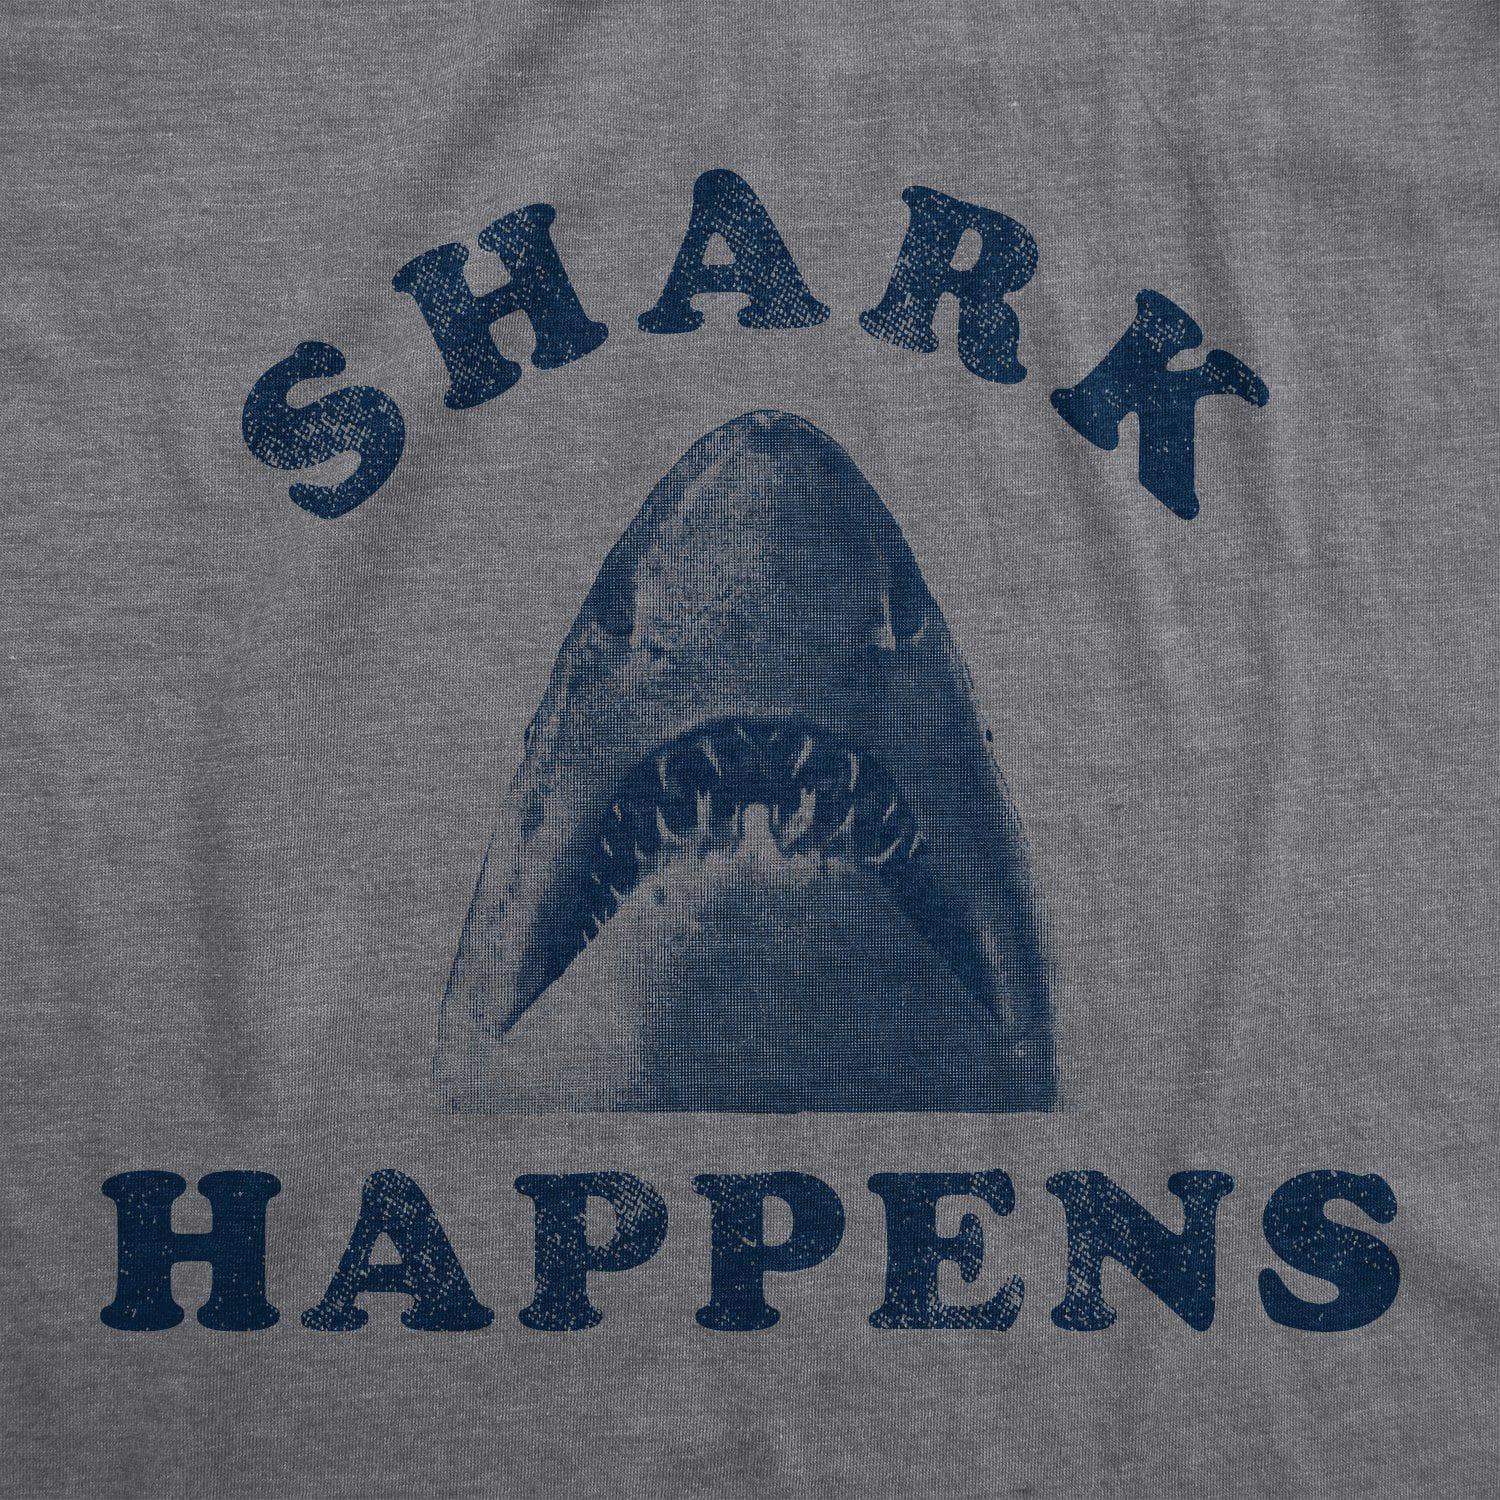 Shark Happens Women's Tshirt - Crazy Dog T-Shirts